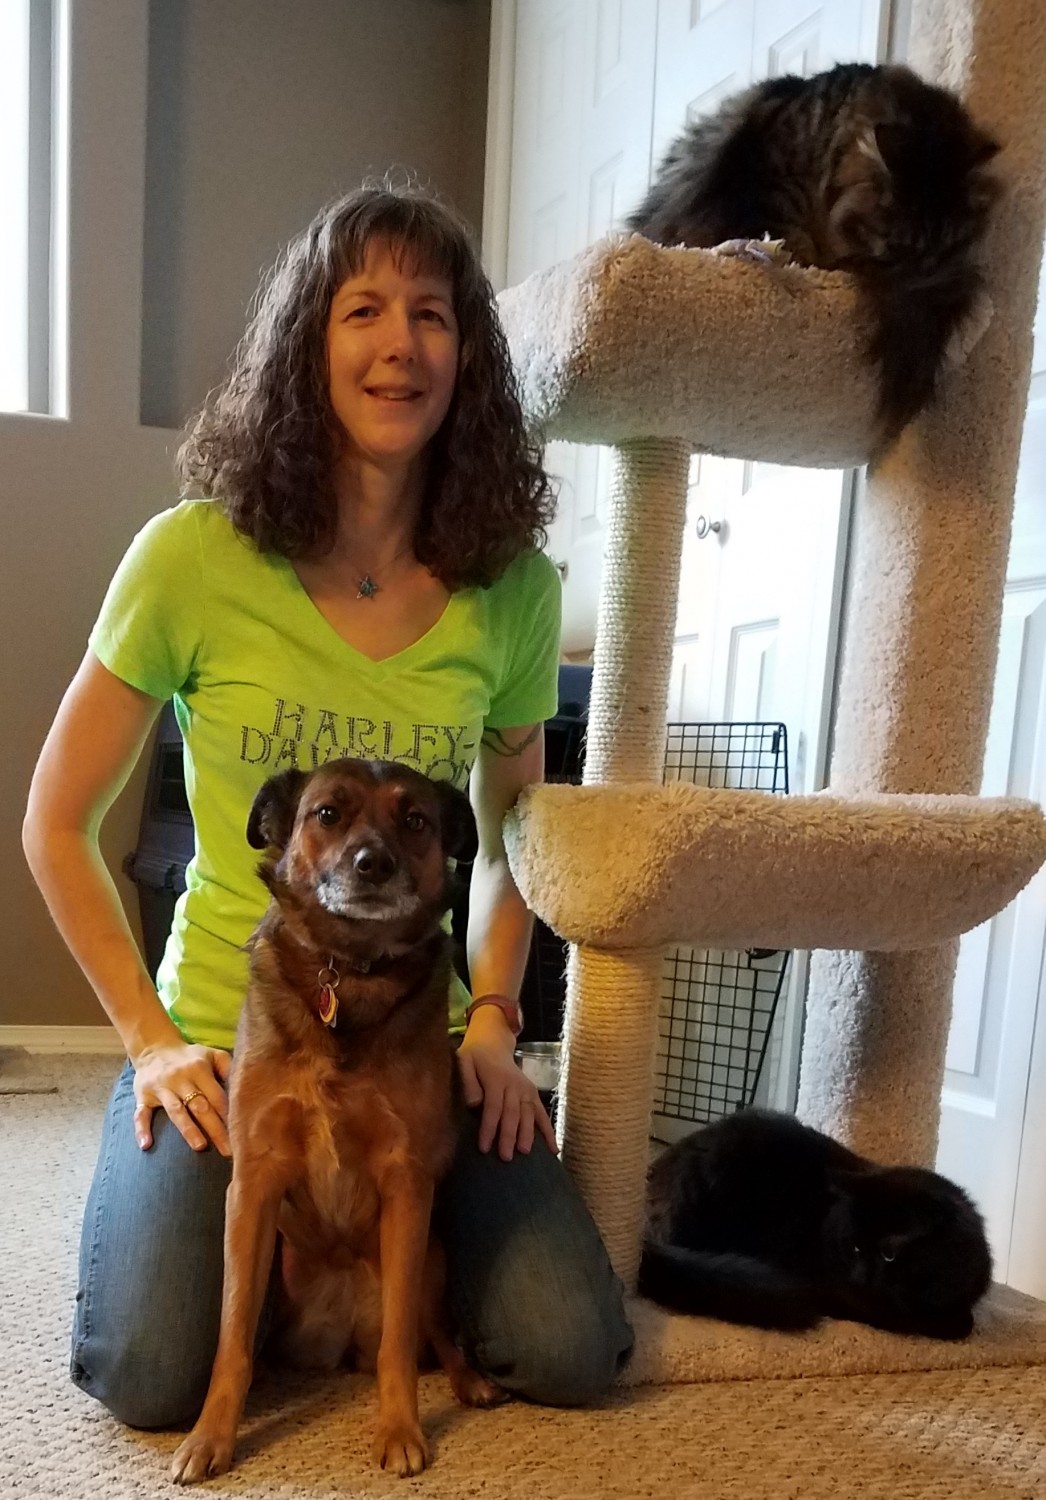 Heather - Lead Licensed Veterinary Technician (LVT)